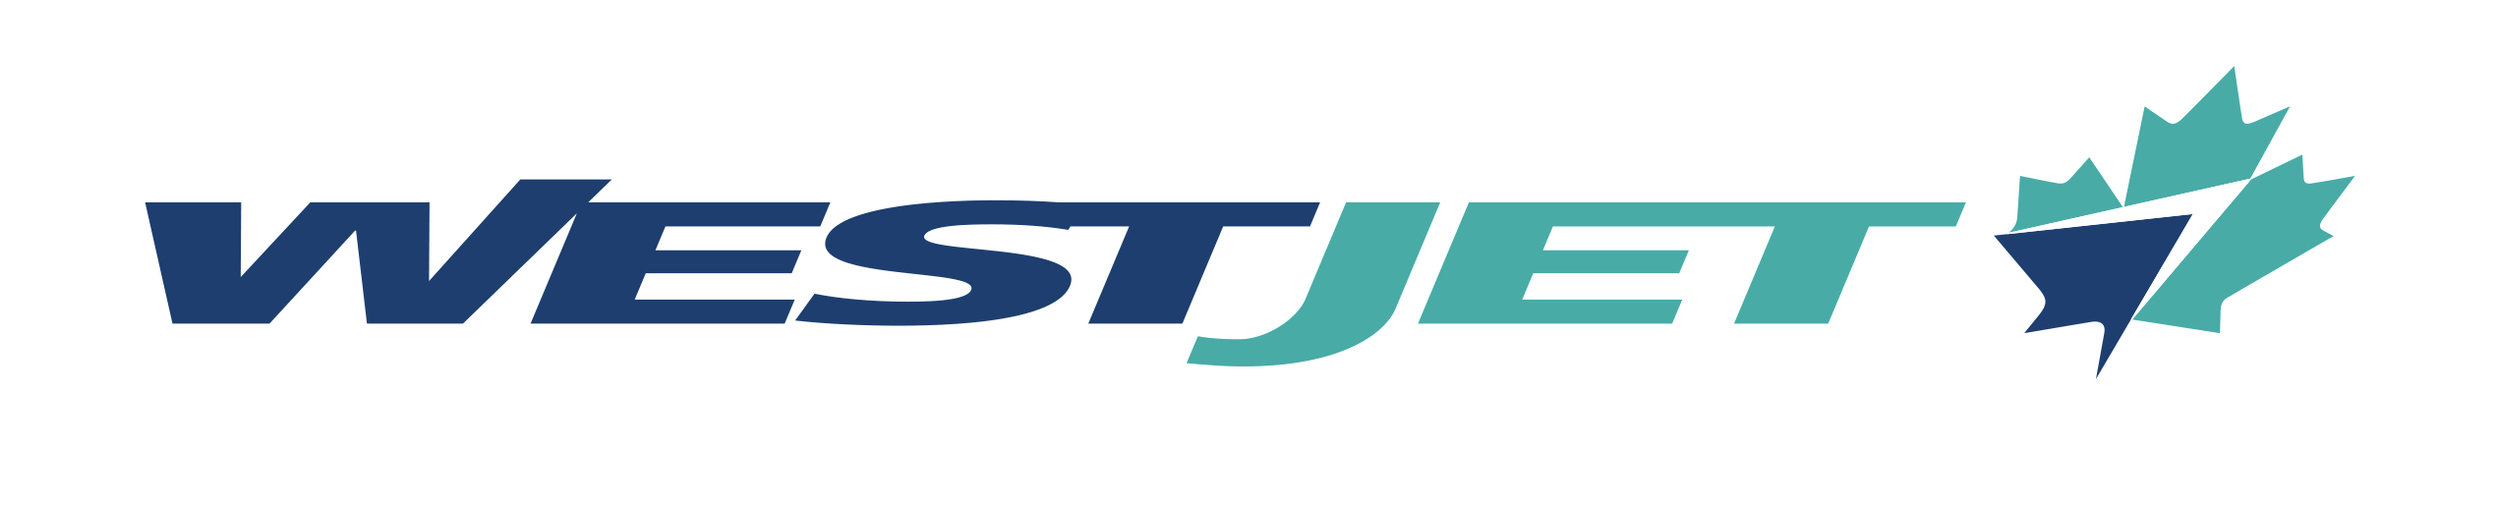 WestJet_logo_rgb.jpg